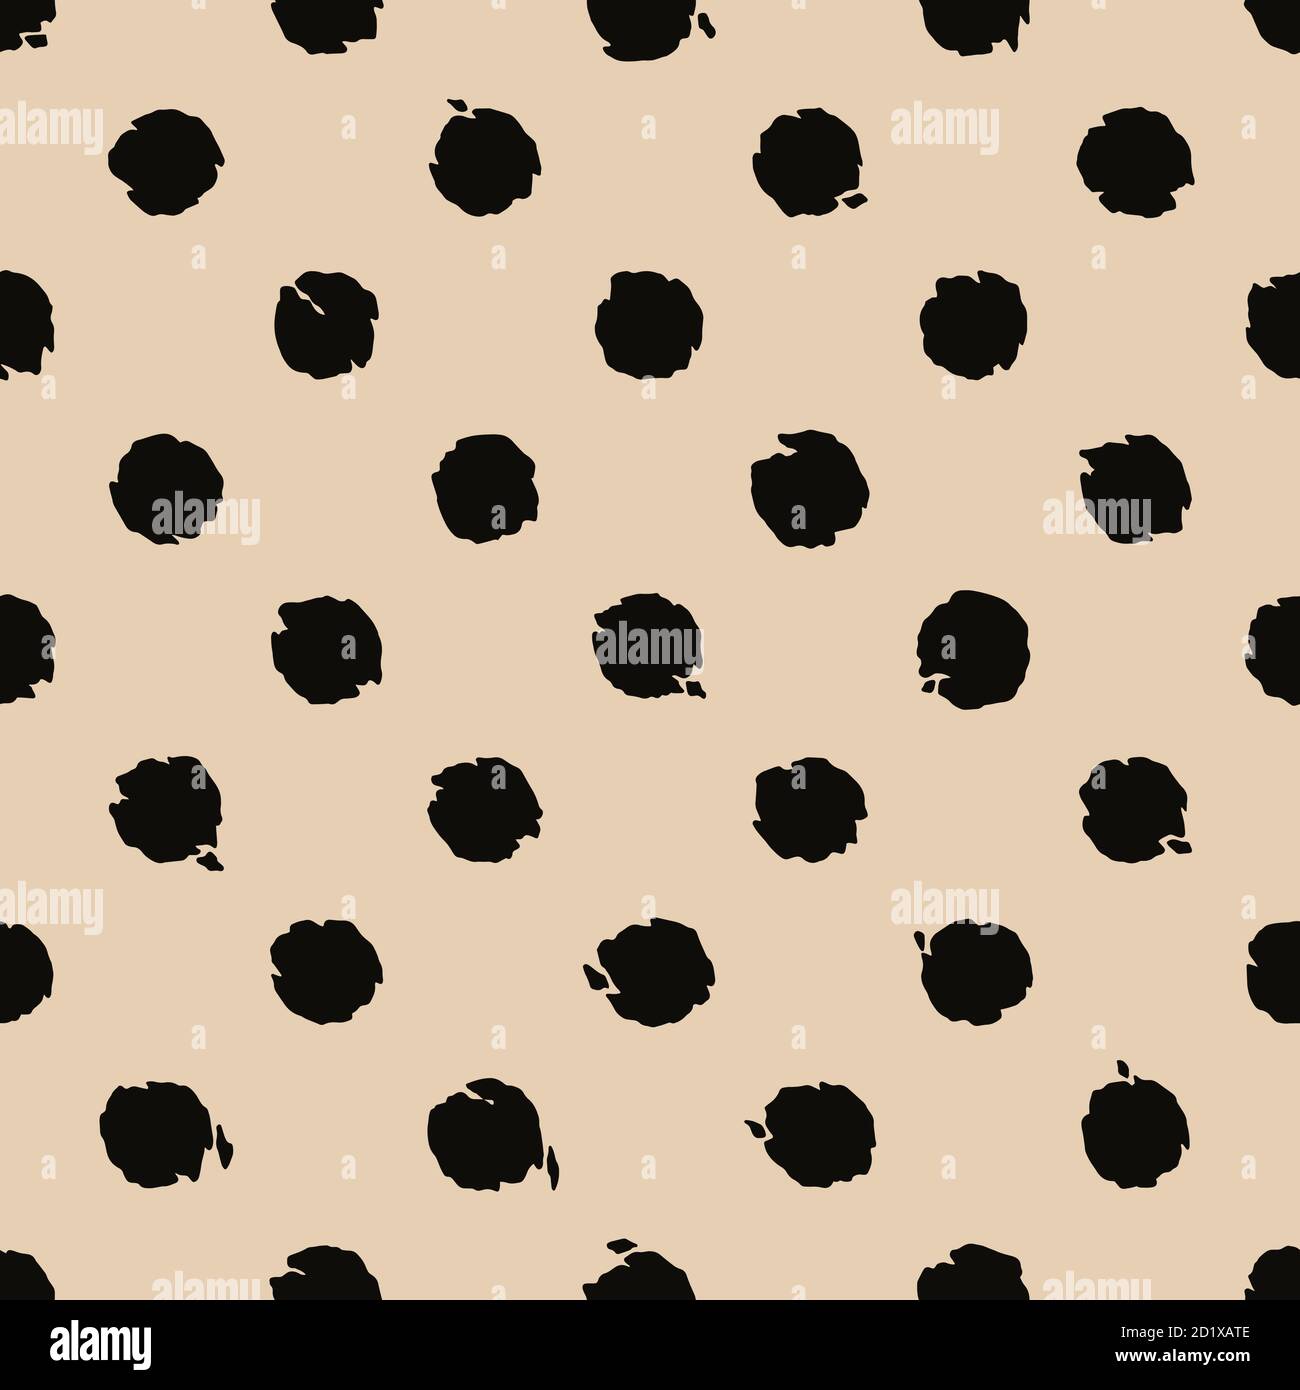 Cheetah skin seamless pattern design. Cheetah polka dots vector illustration background. Wildlife fur skin design illustration for print, web, home de Stock Vector